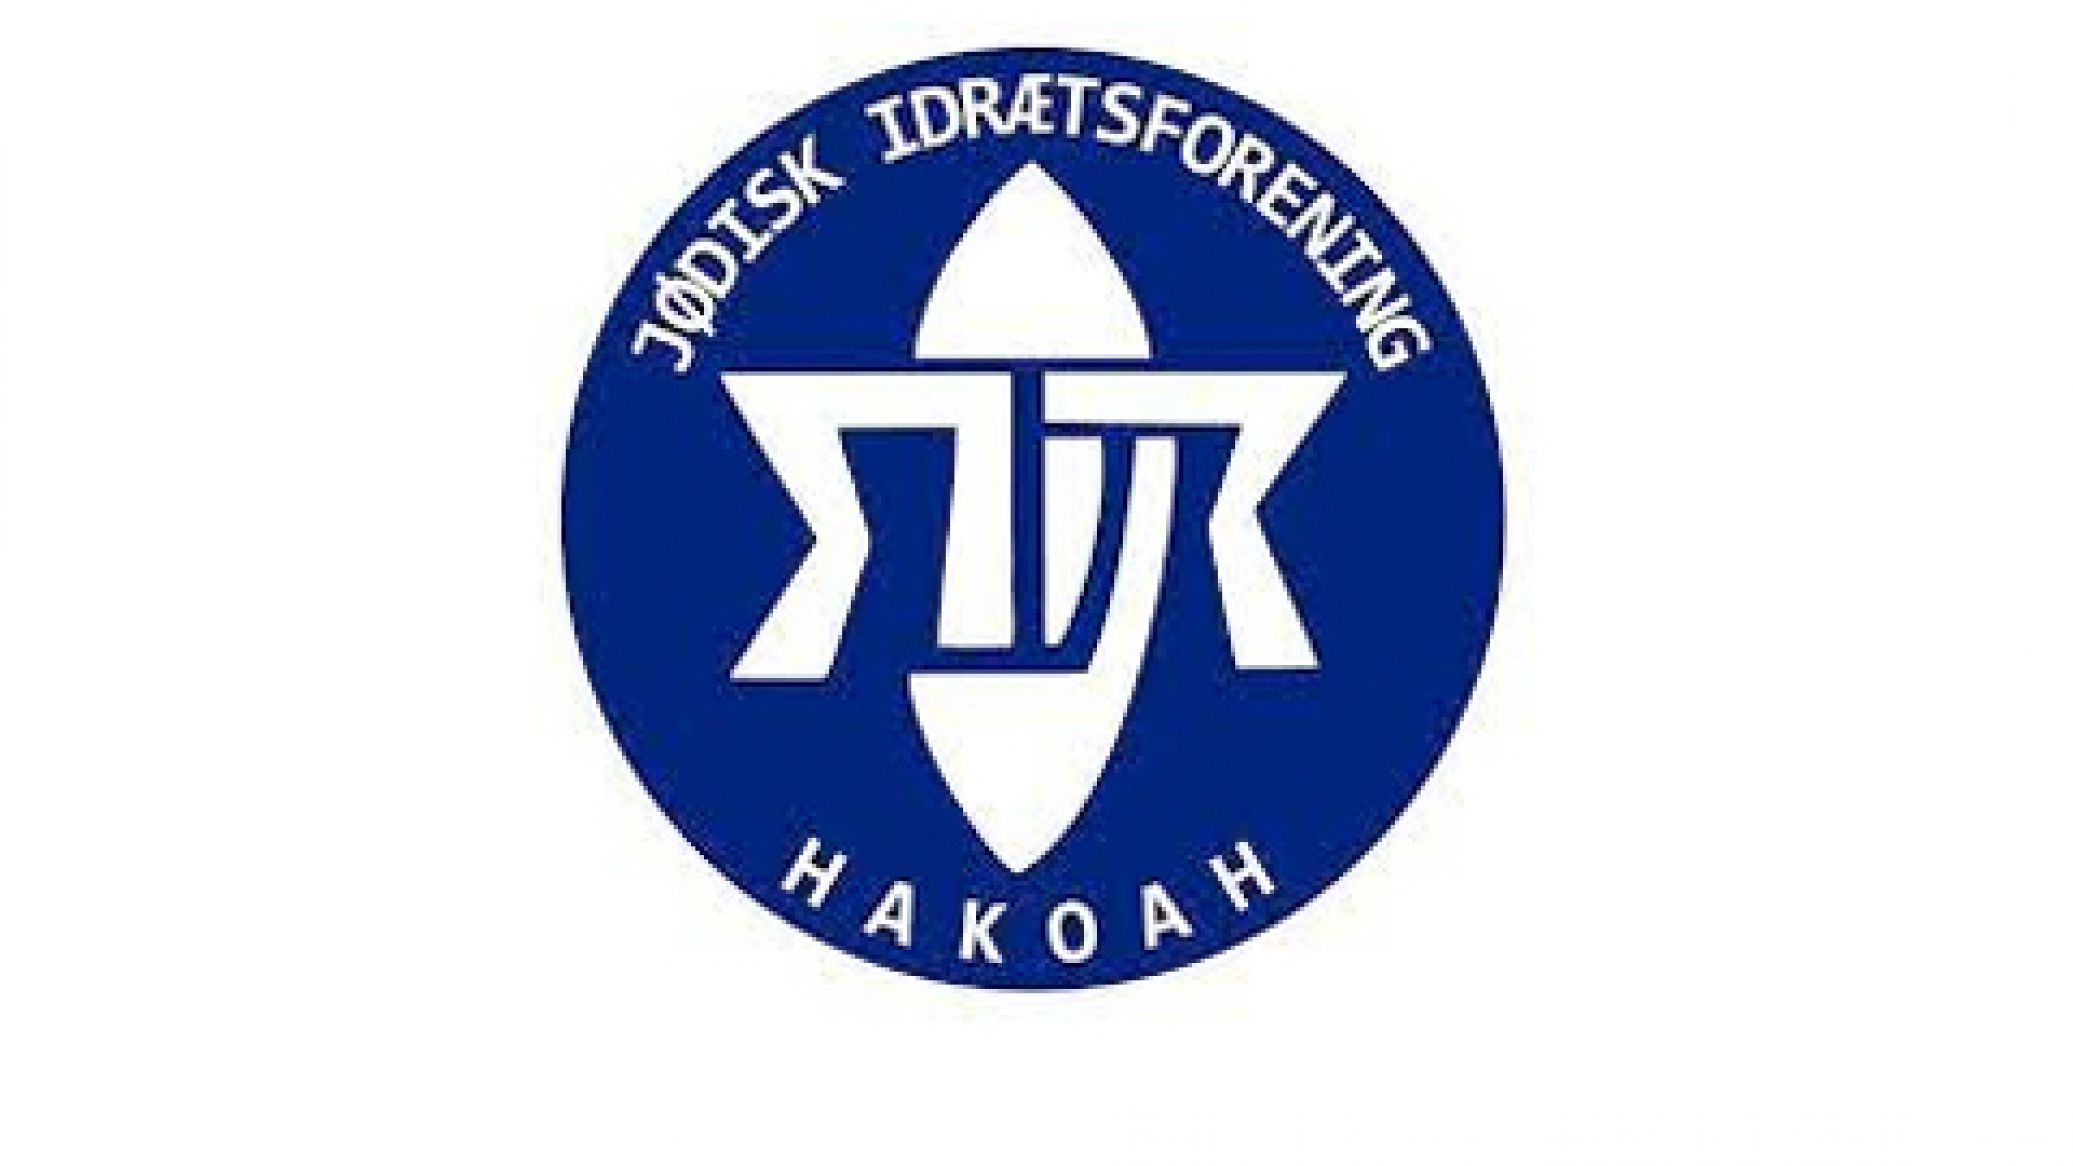 JIF Hakoah